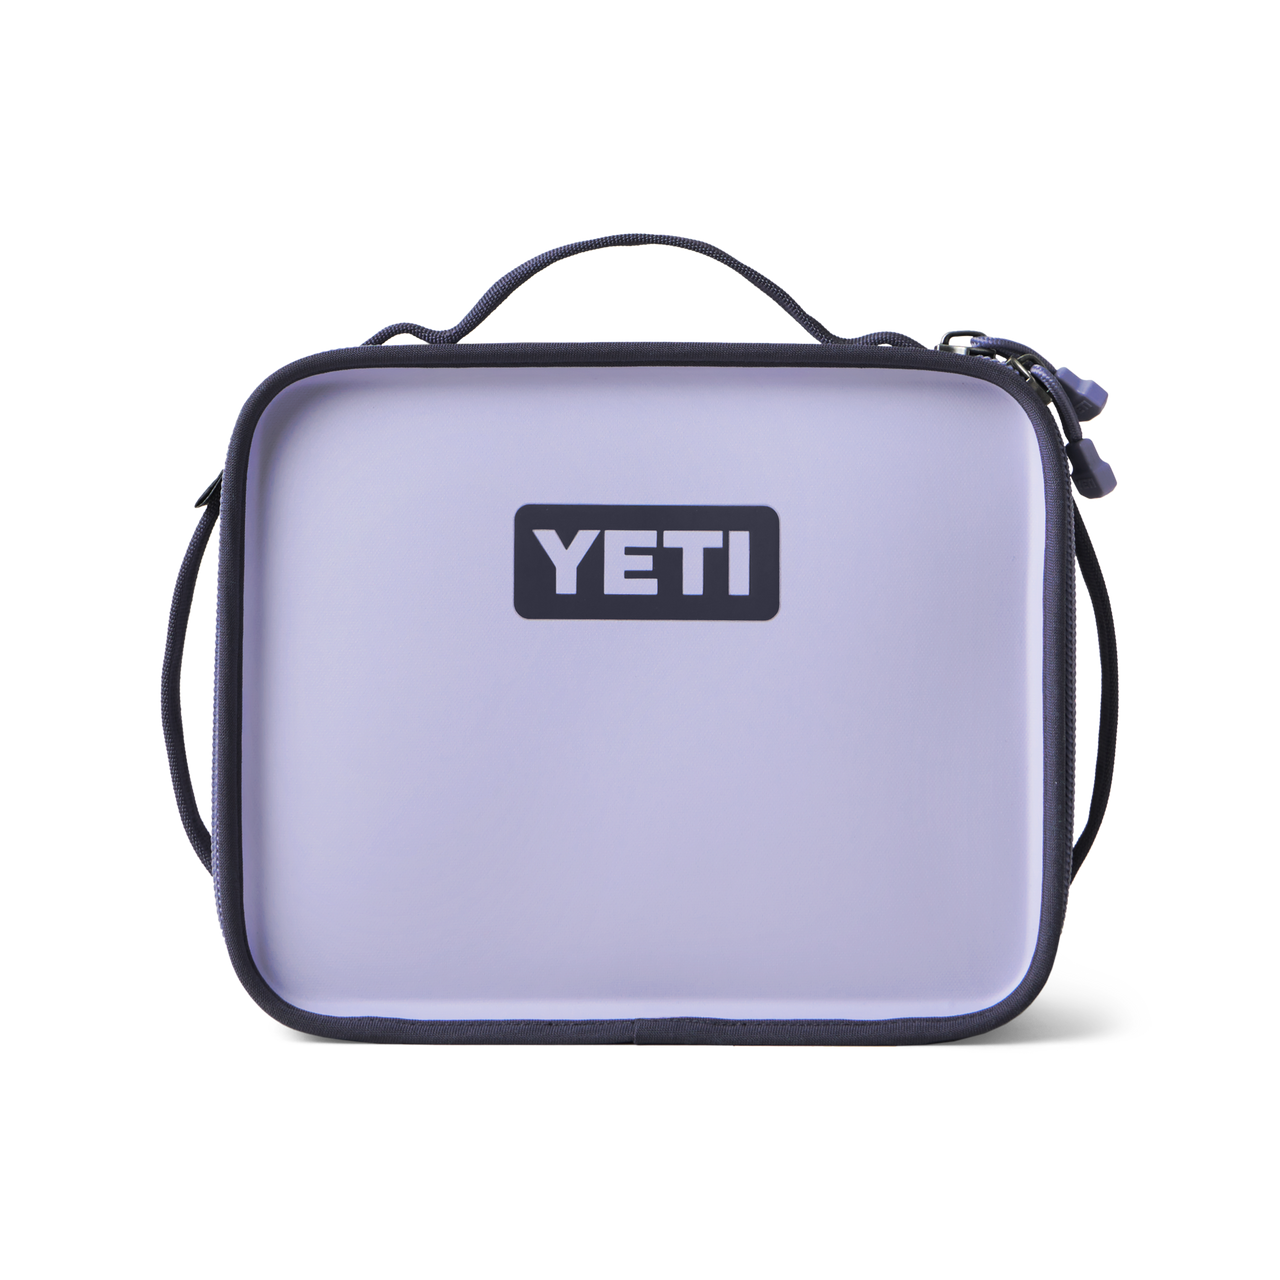 YETI Daytrip Lunch Box - Coral - TackleDirect